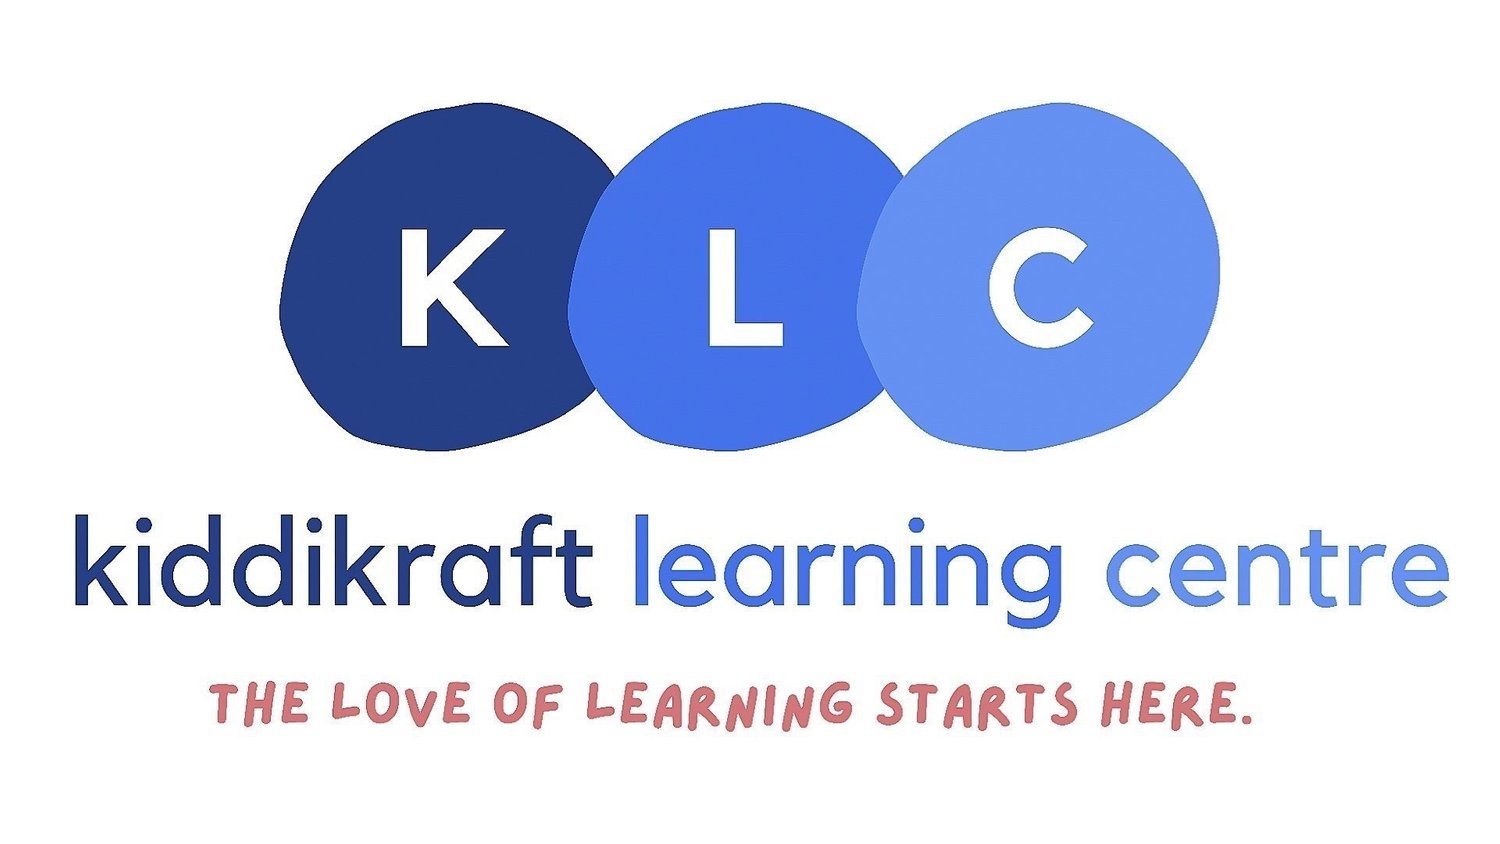 KiddiKraft Learning Centre